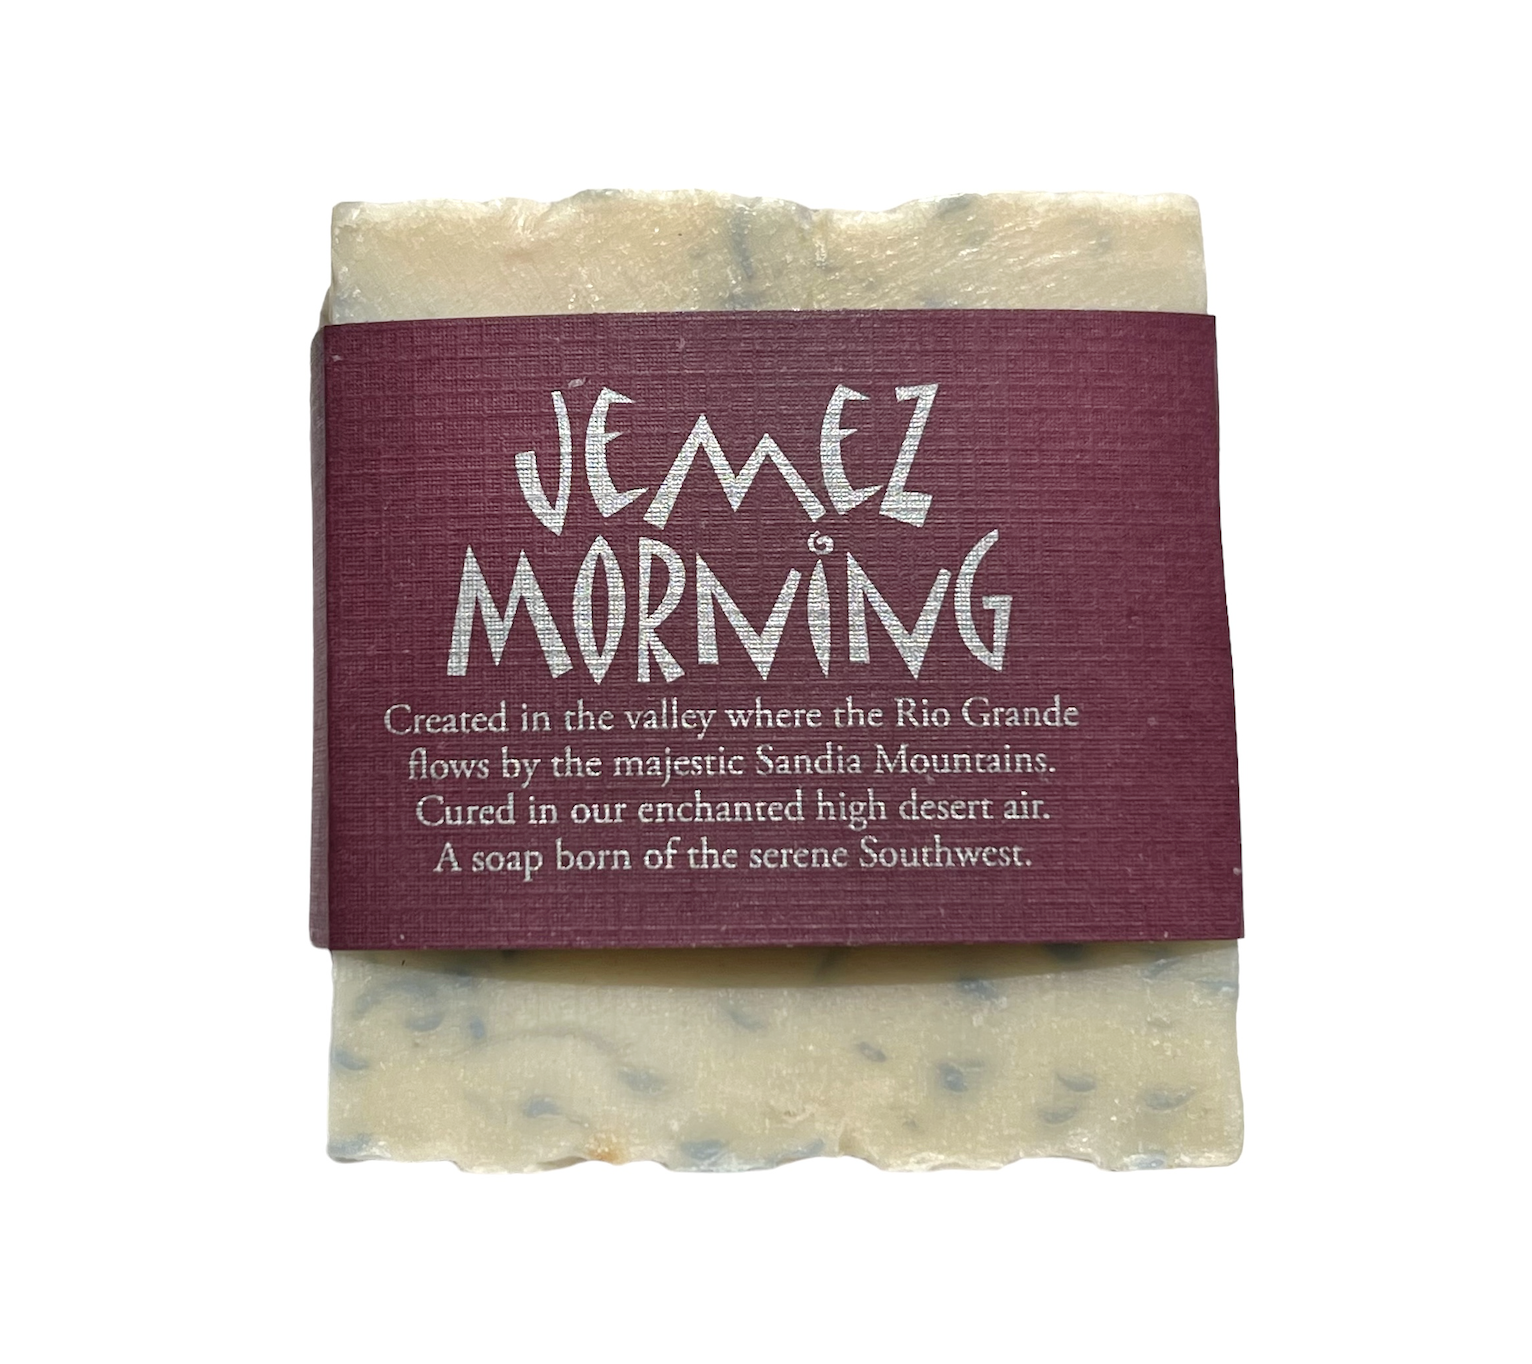 Jemez Morning soap by Sandia Soap Company